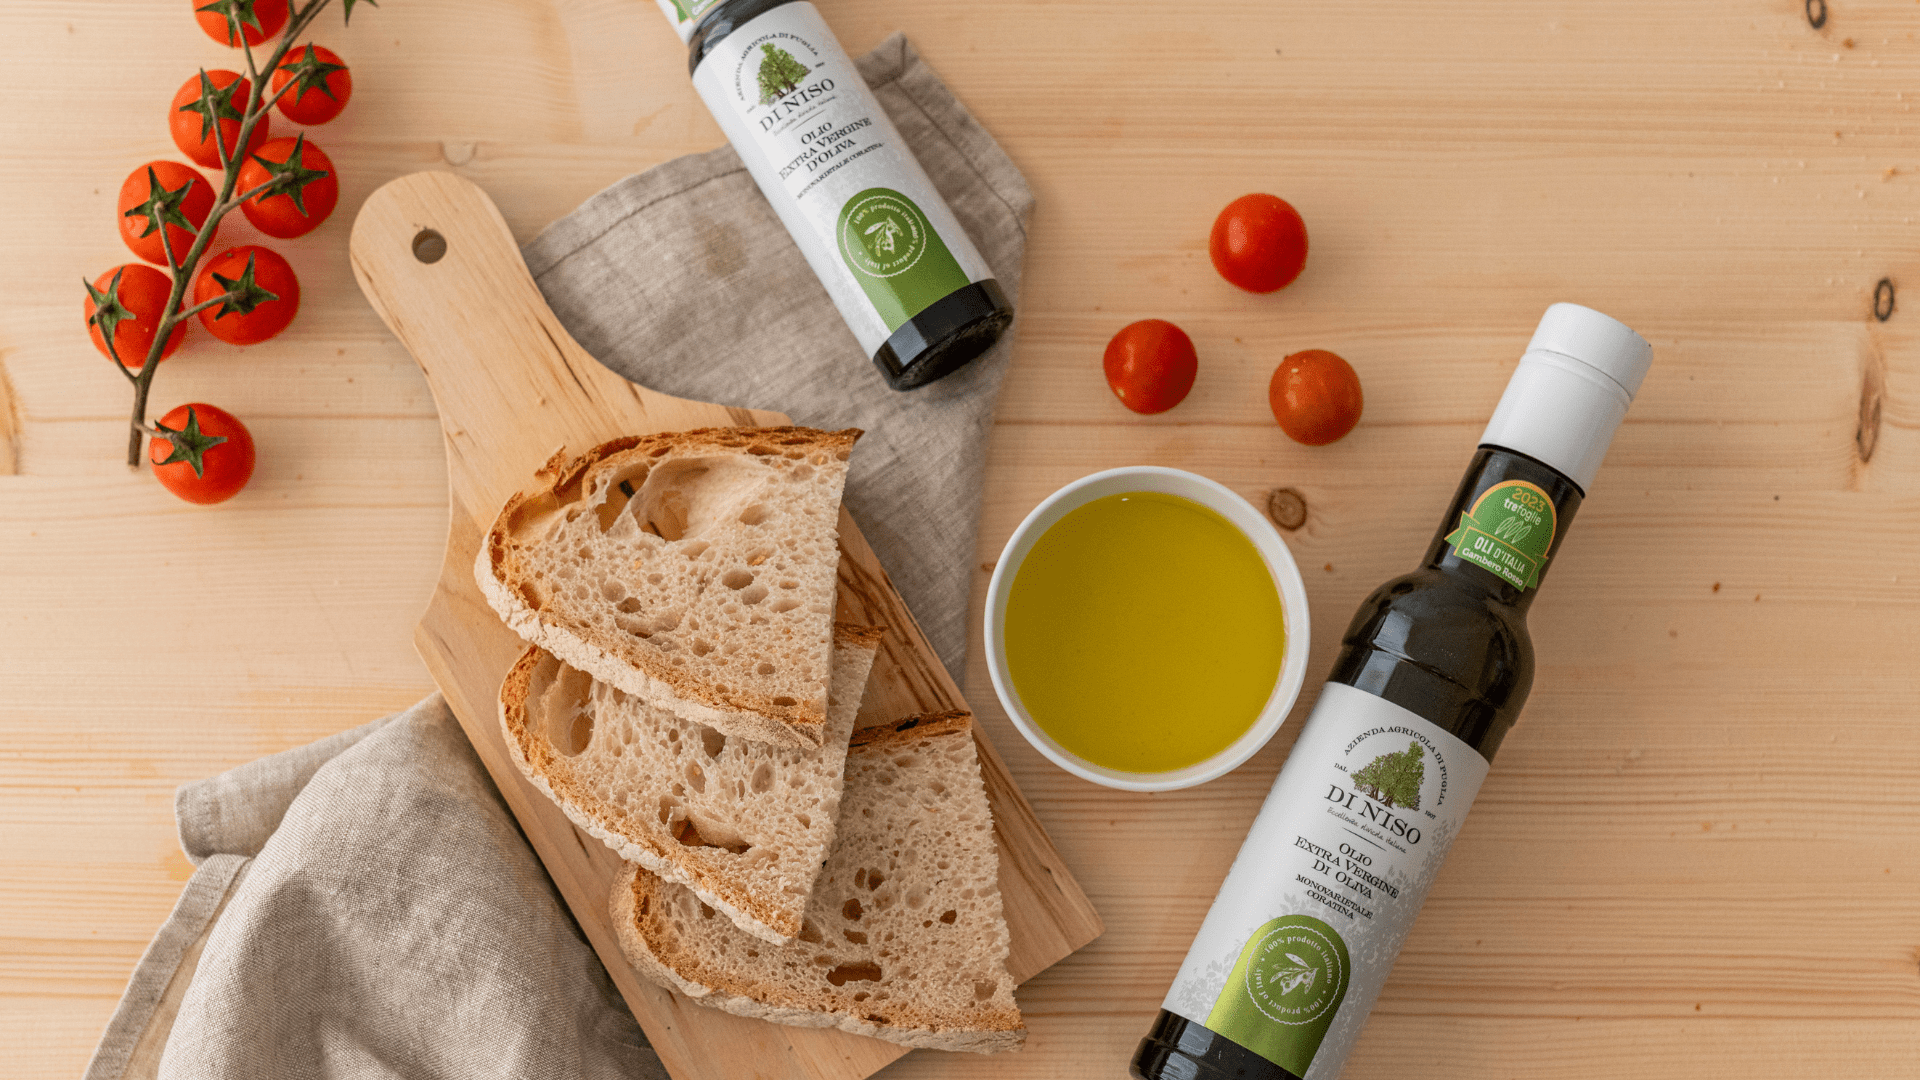 Quante calorie ha l’olio extravergine di oliva Di Niso?